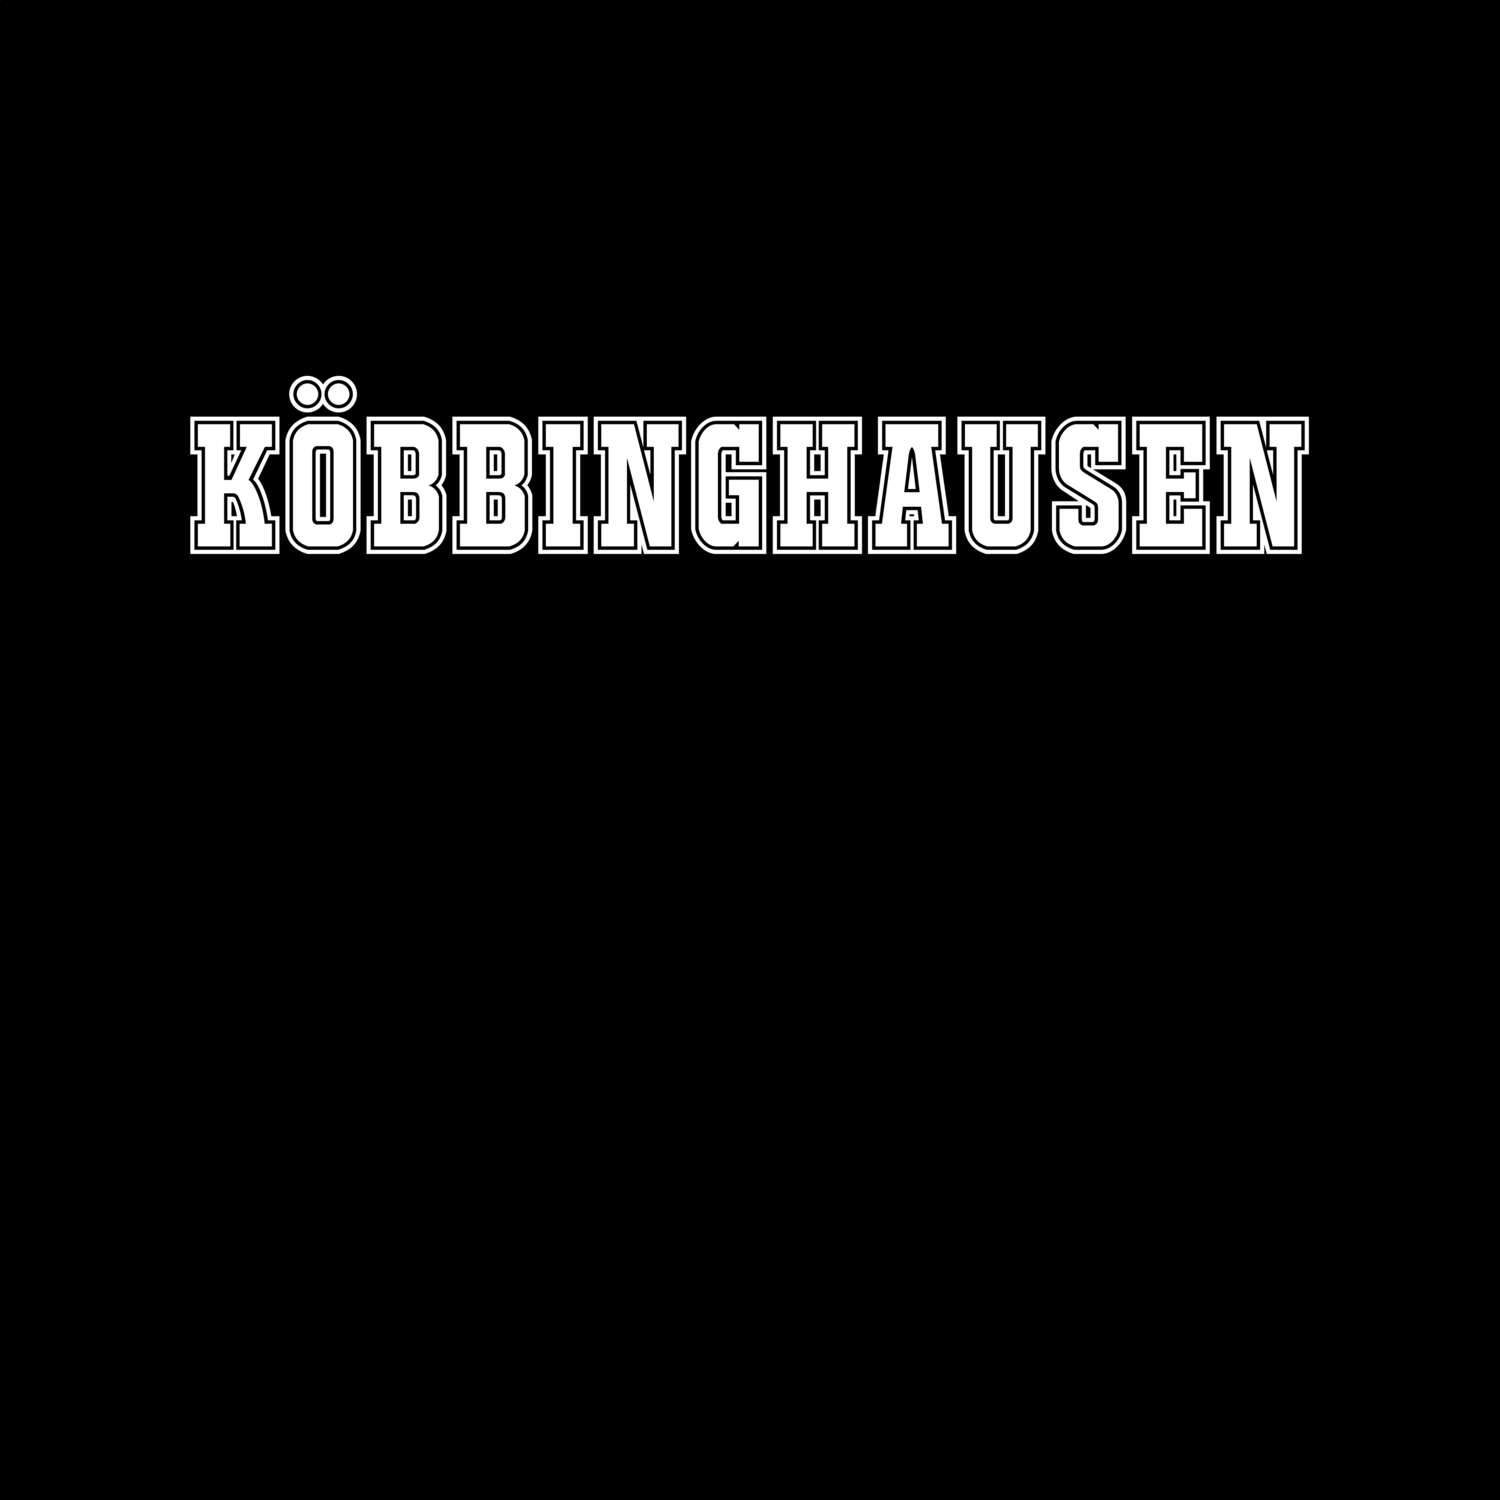 Köbbinghausen T-Shirt »Classic«